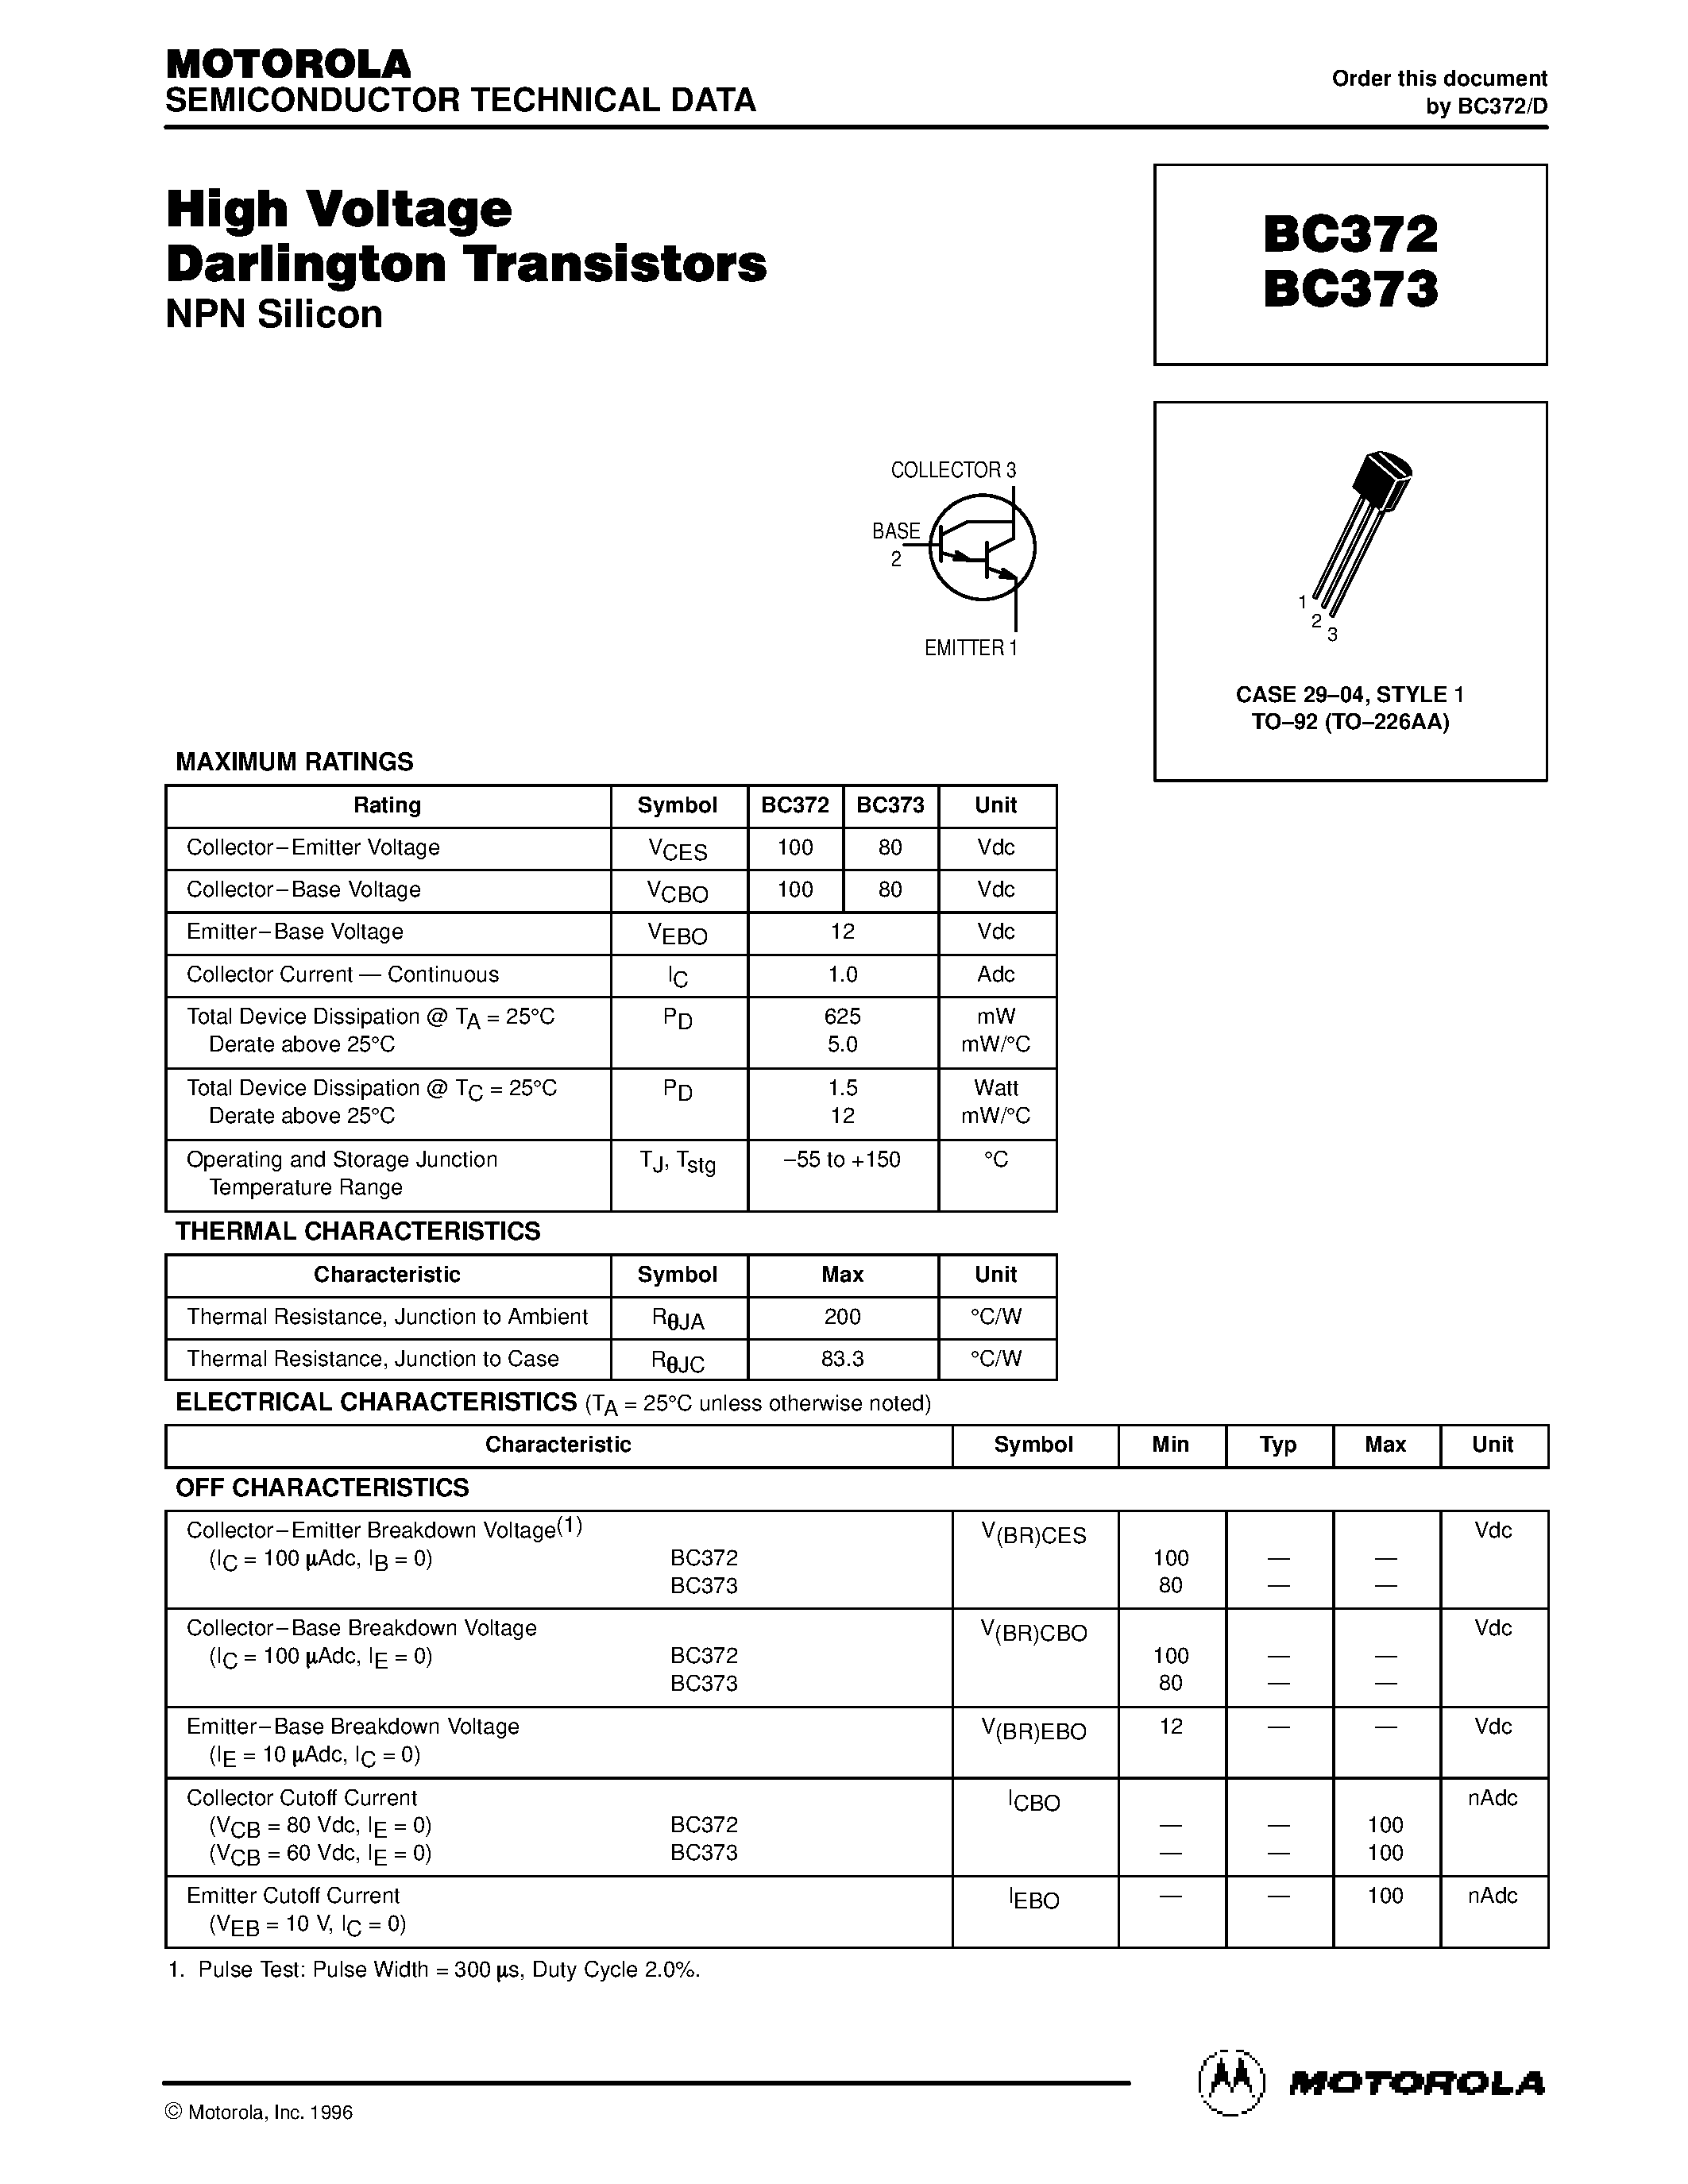 Datasheet BC373 - High Voltage Darlington Transistors page 1